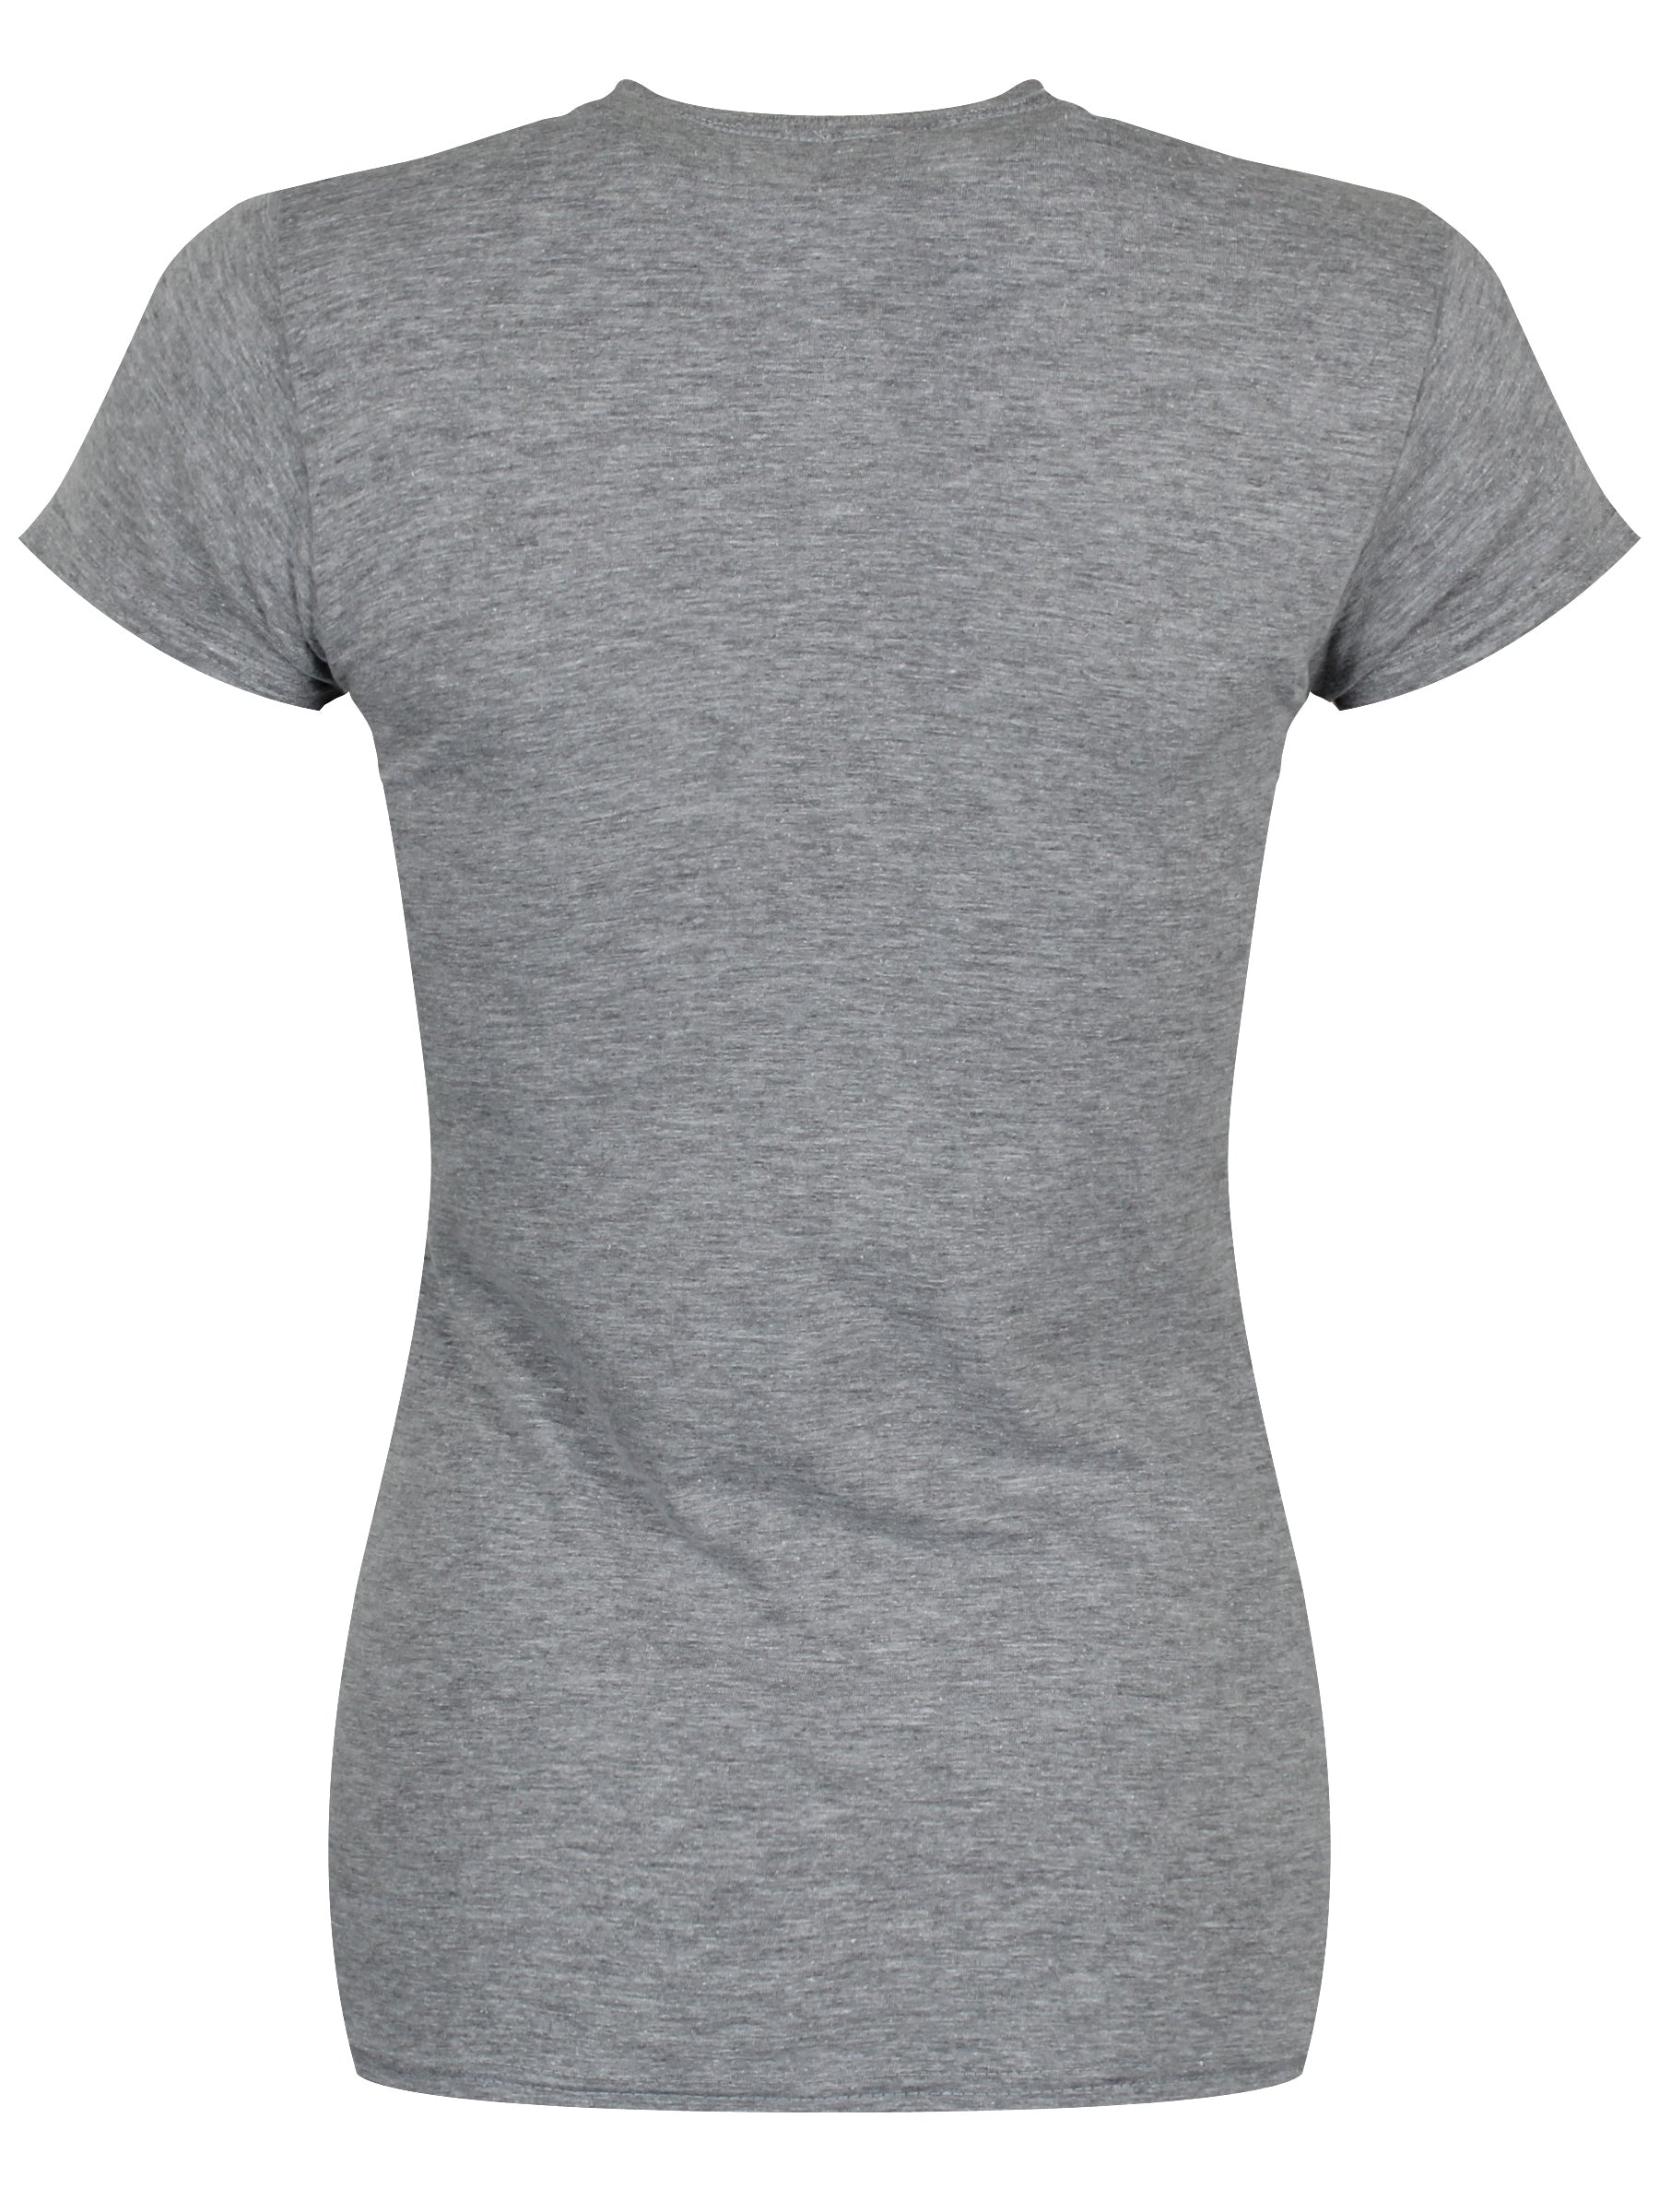 Riverdale Football Ladies Heather Grey T-Shirt